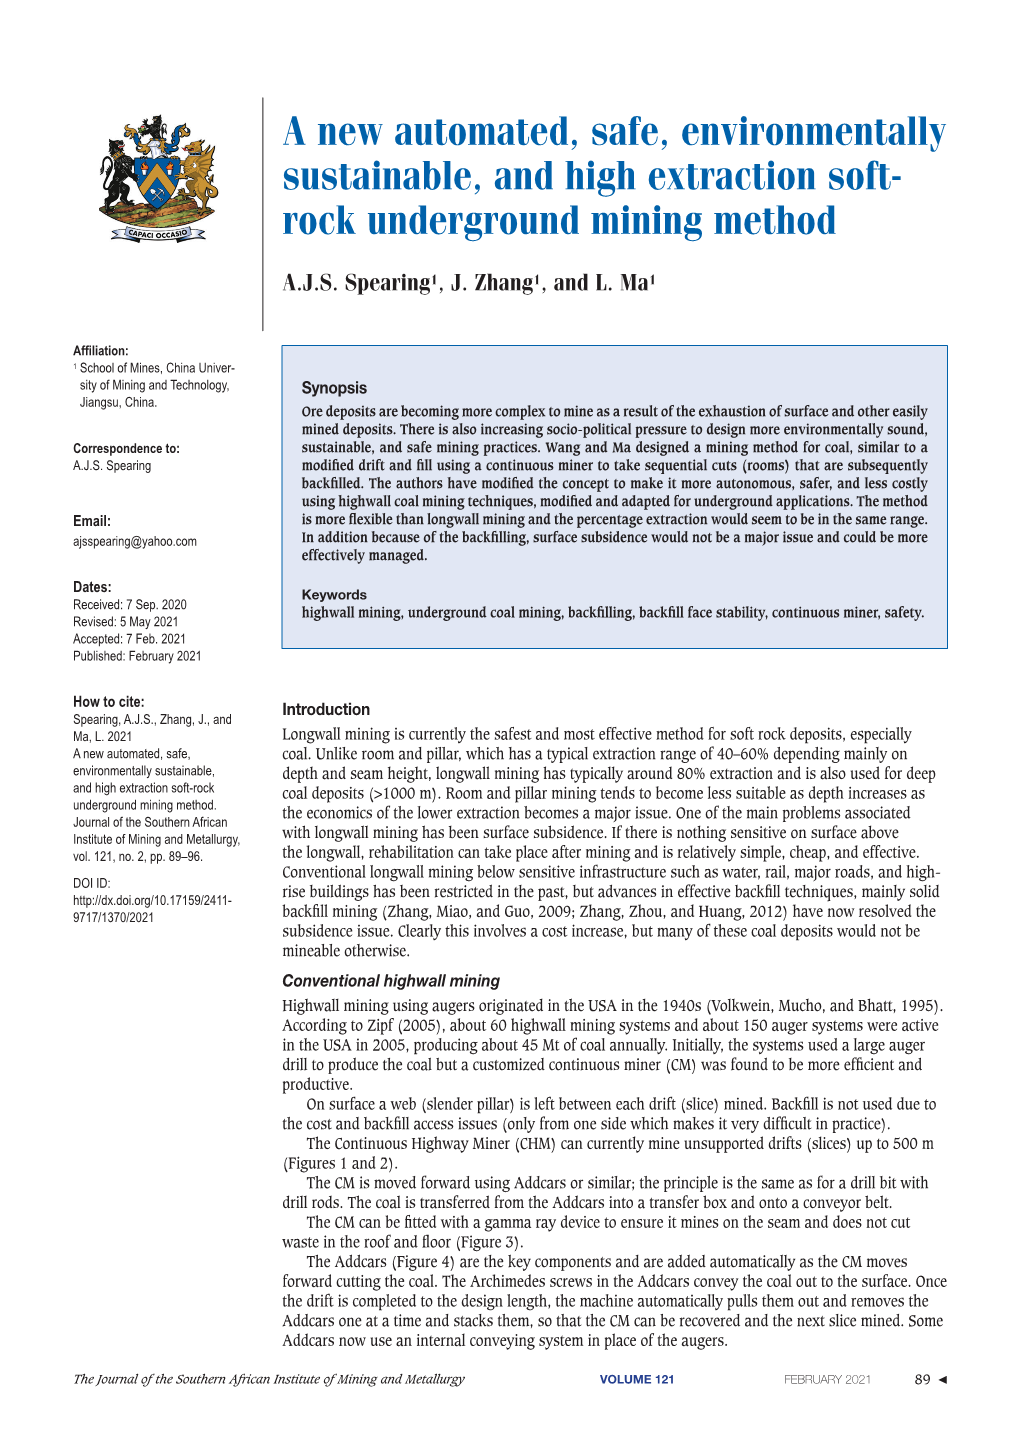 Rock Underground Mining Method